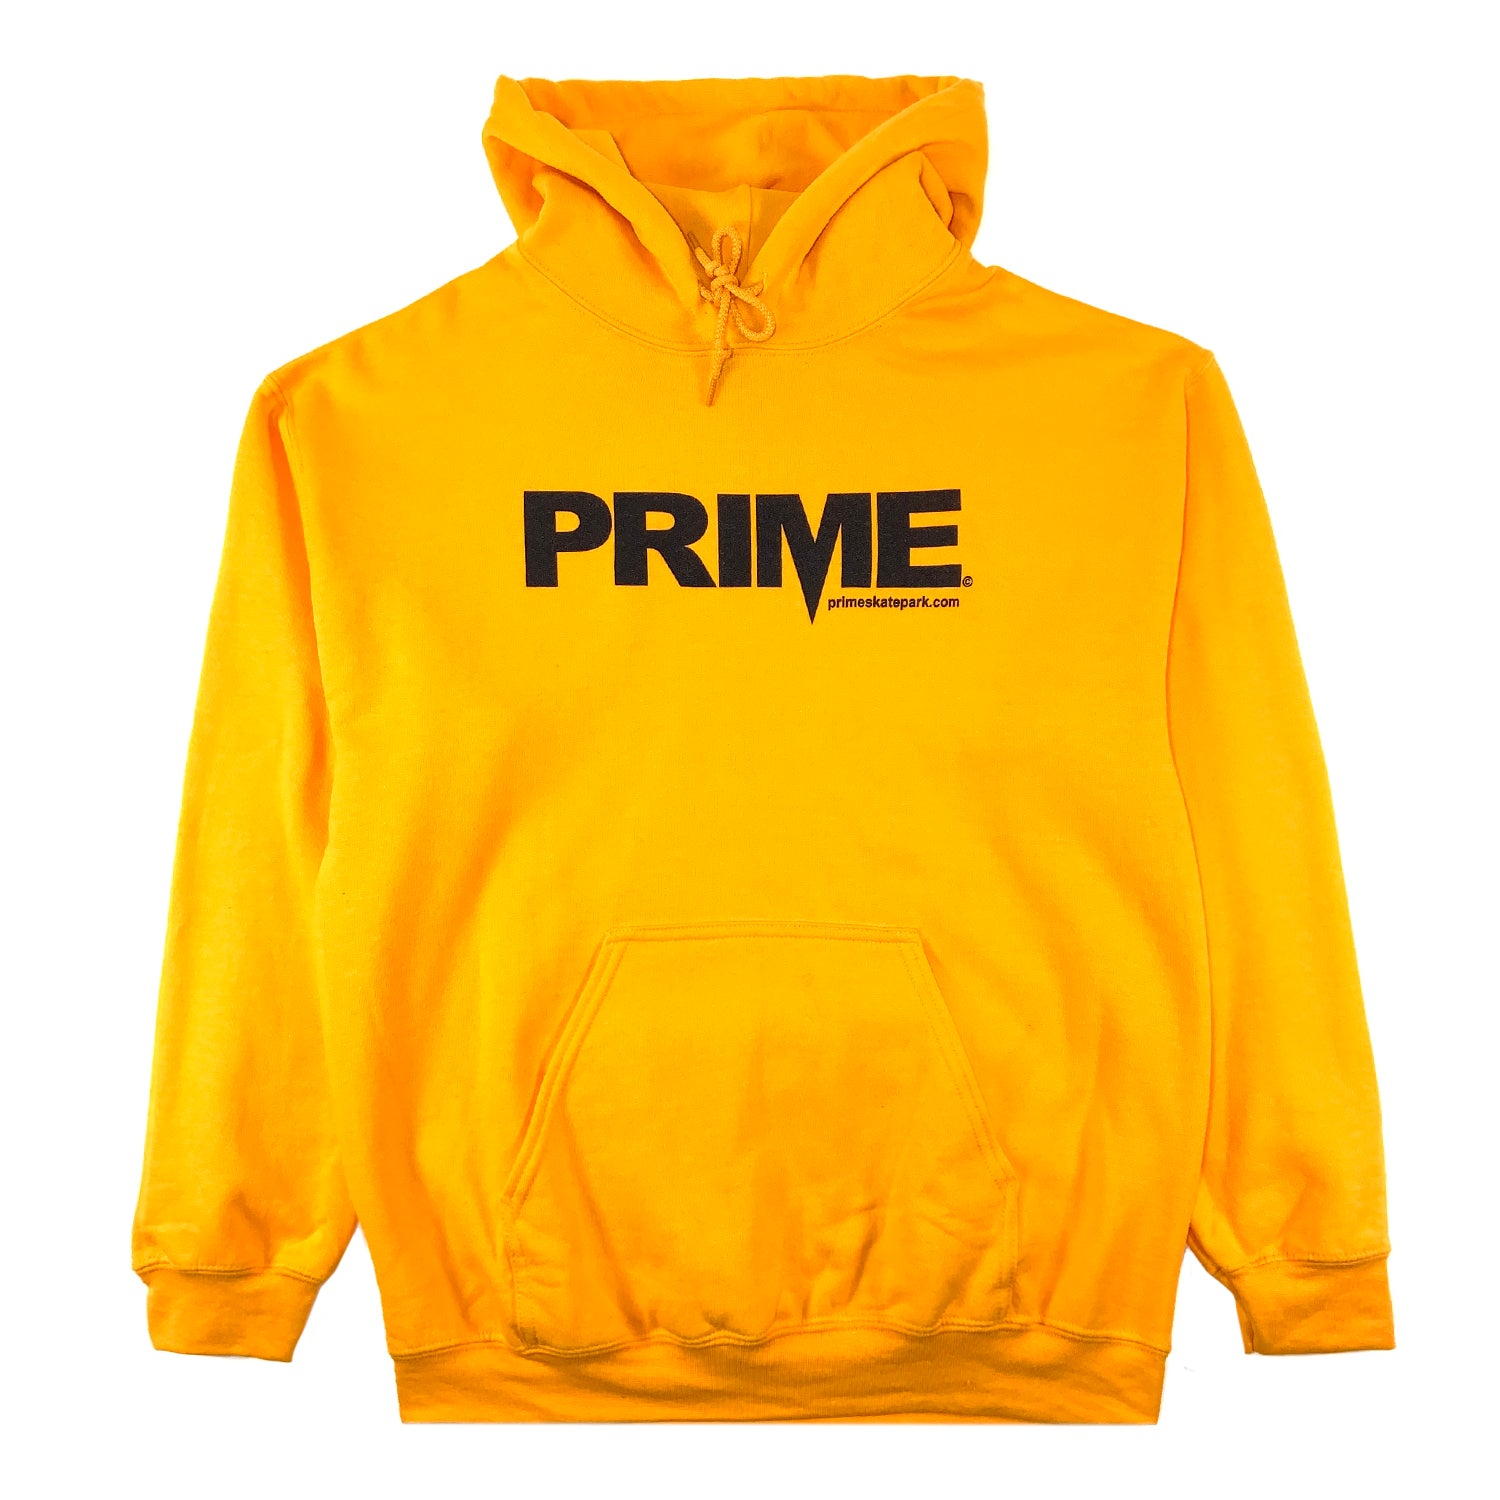 Prime Delux OG Logo Hooded Sweat - Yellow / Black - Prime Delux Store